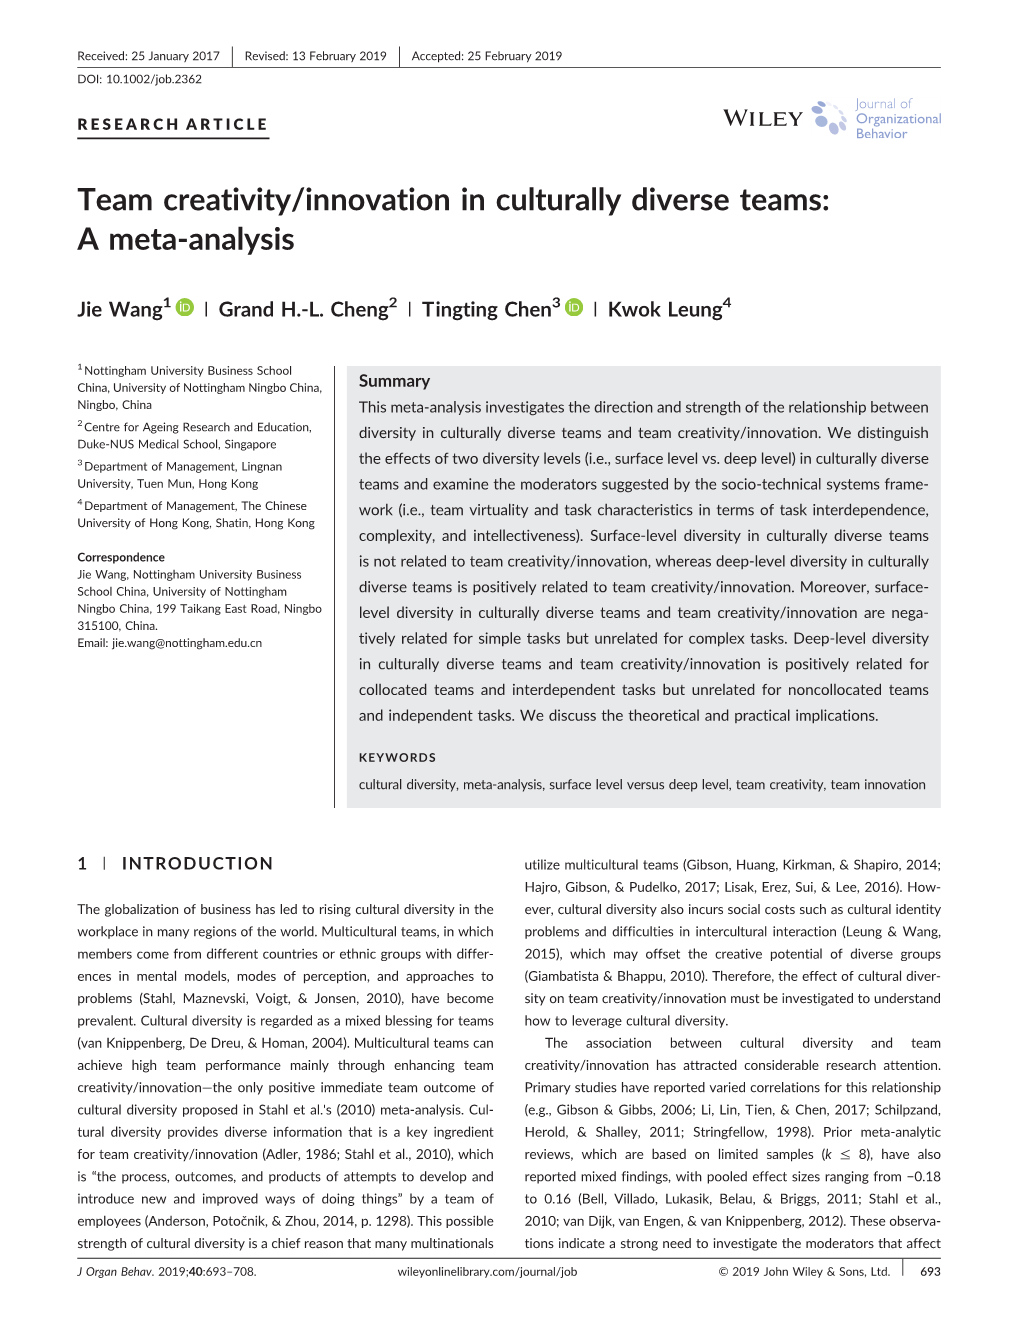 Team Creativity/Innovation in Culturally Diverse Teams: a Meta-Analysis